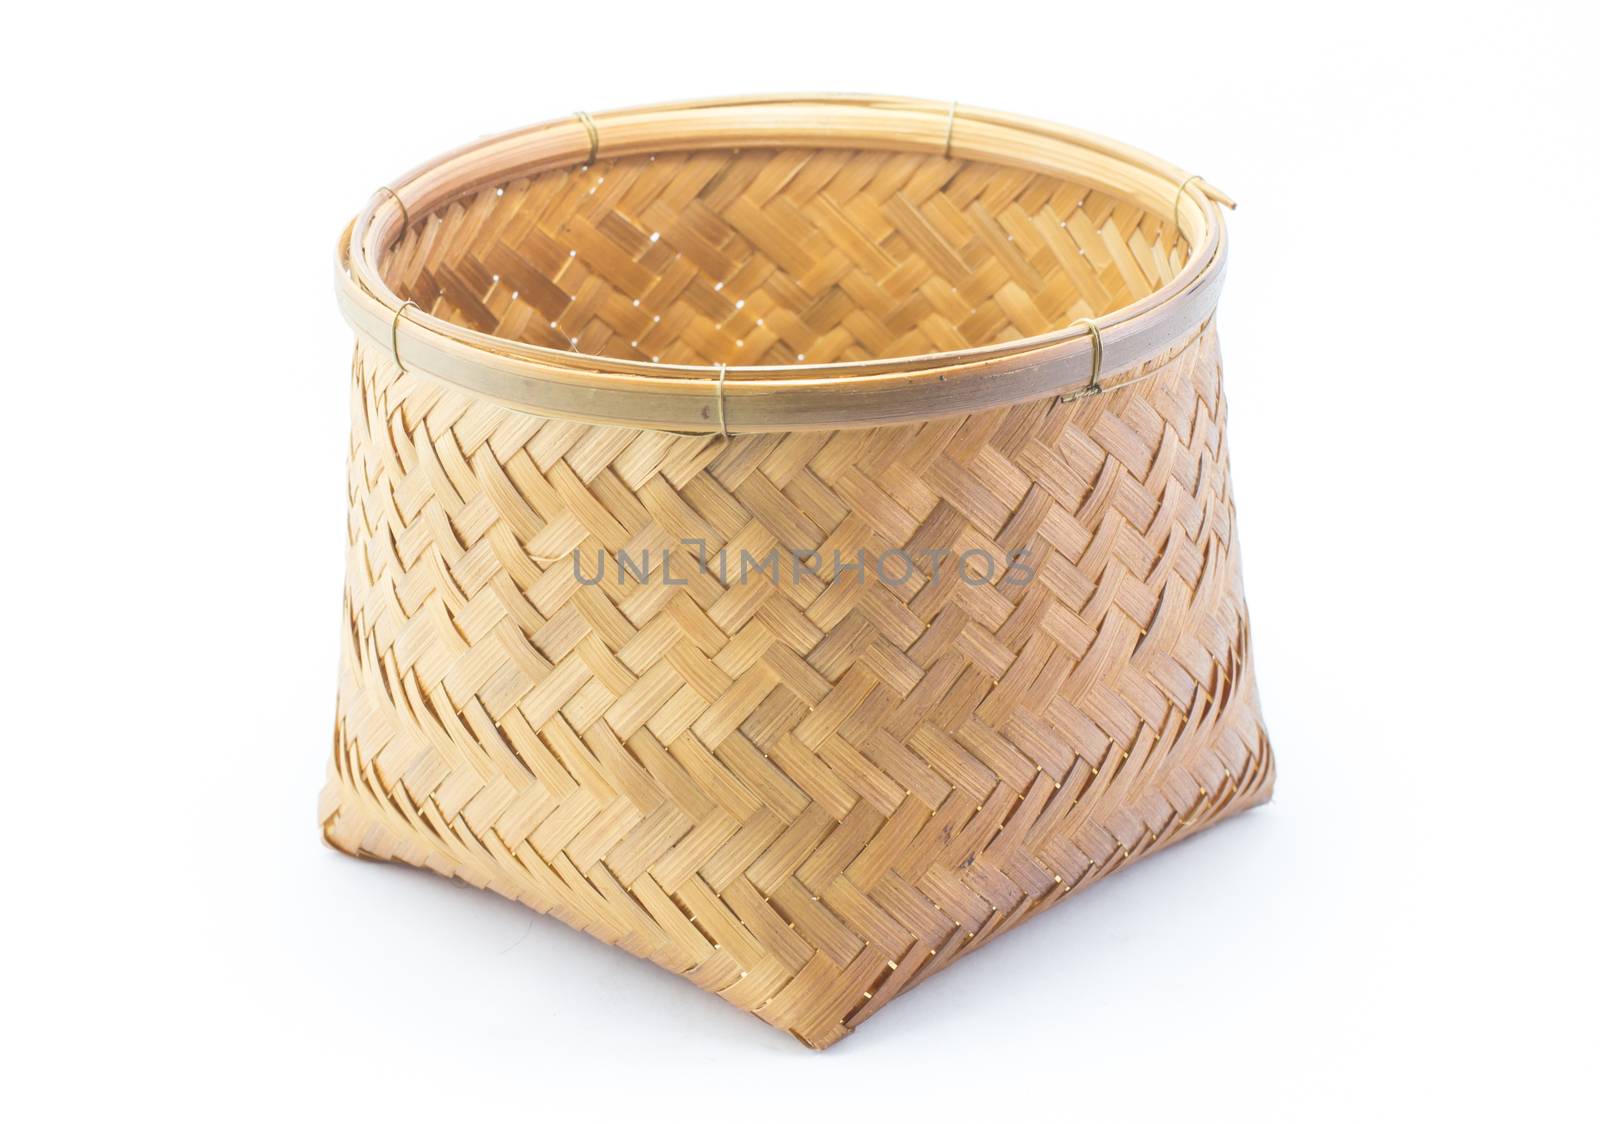 Bamboo Basket Isolated with white background